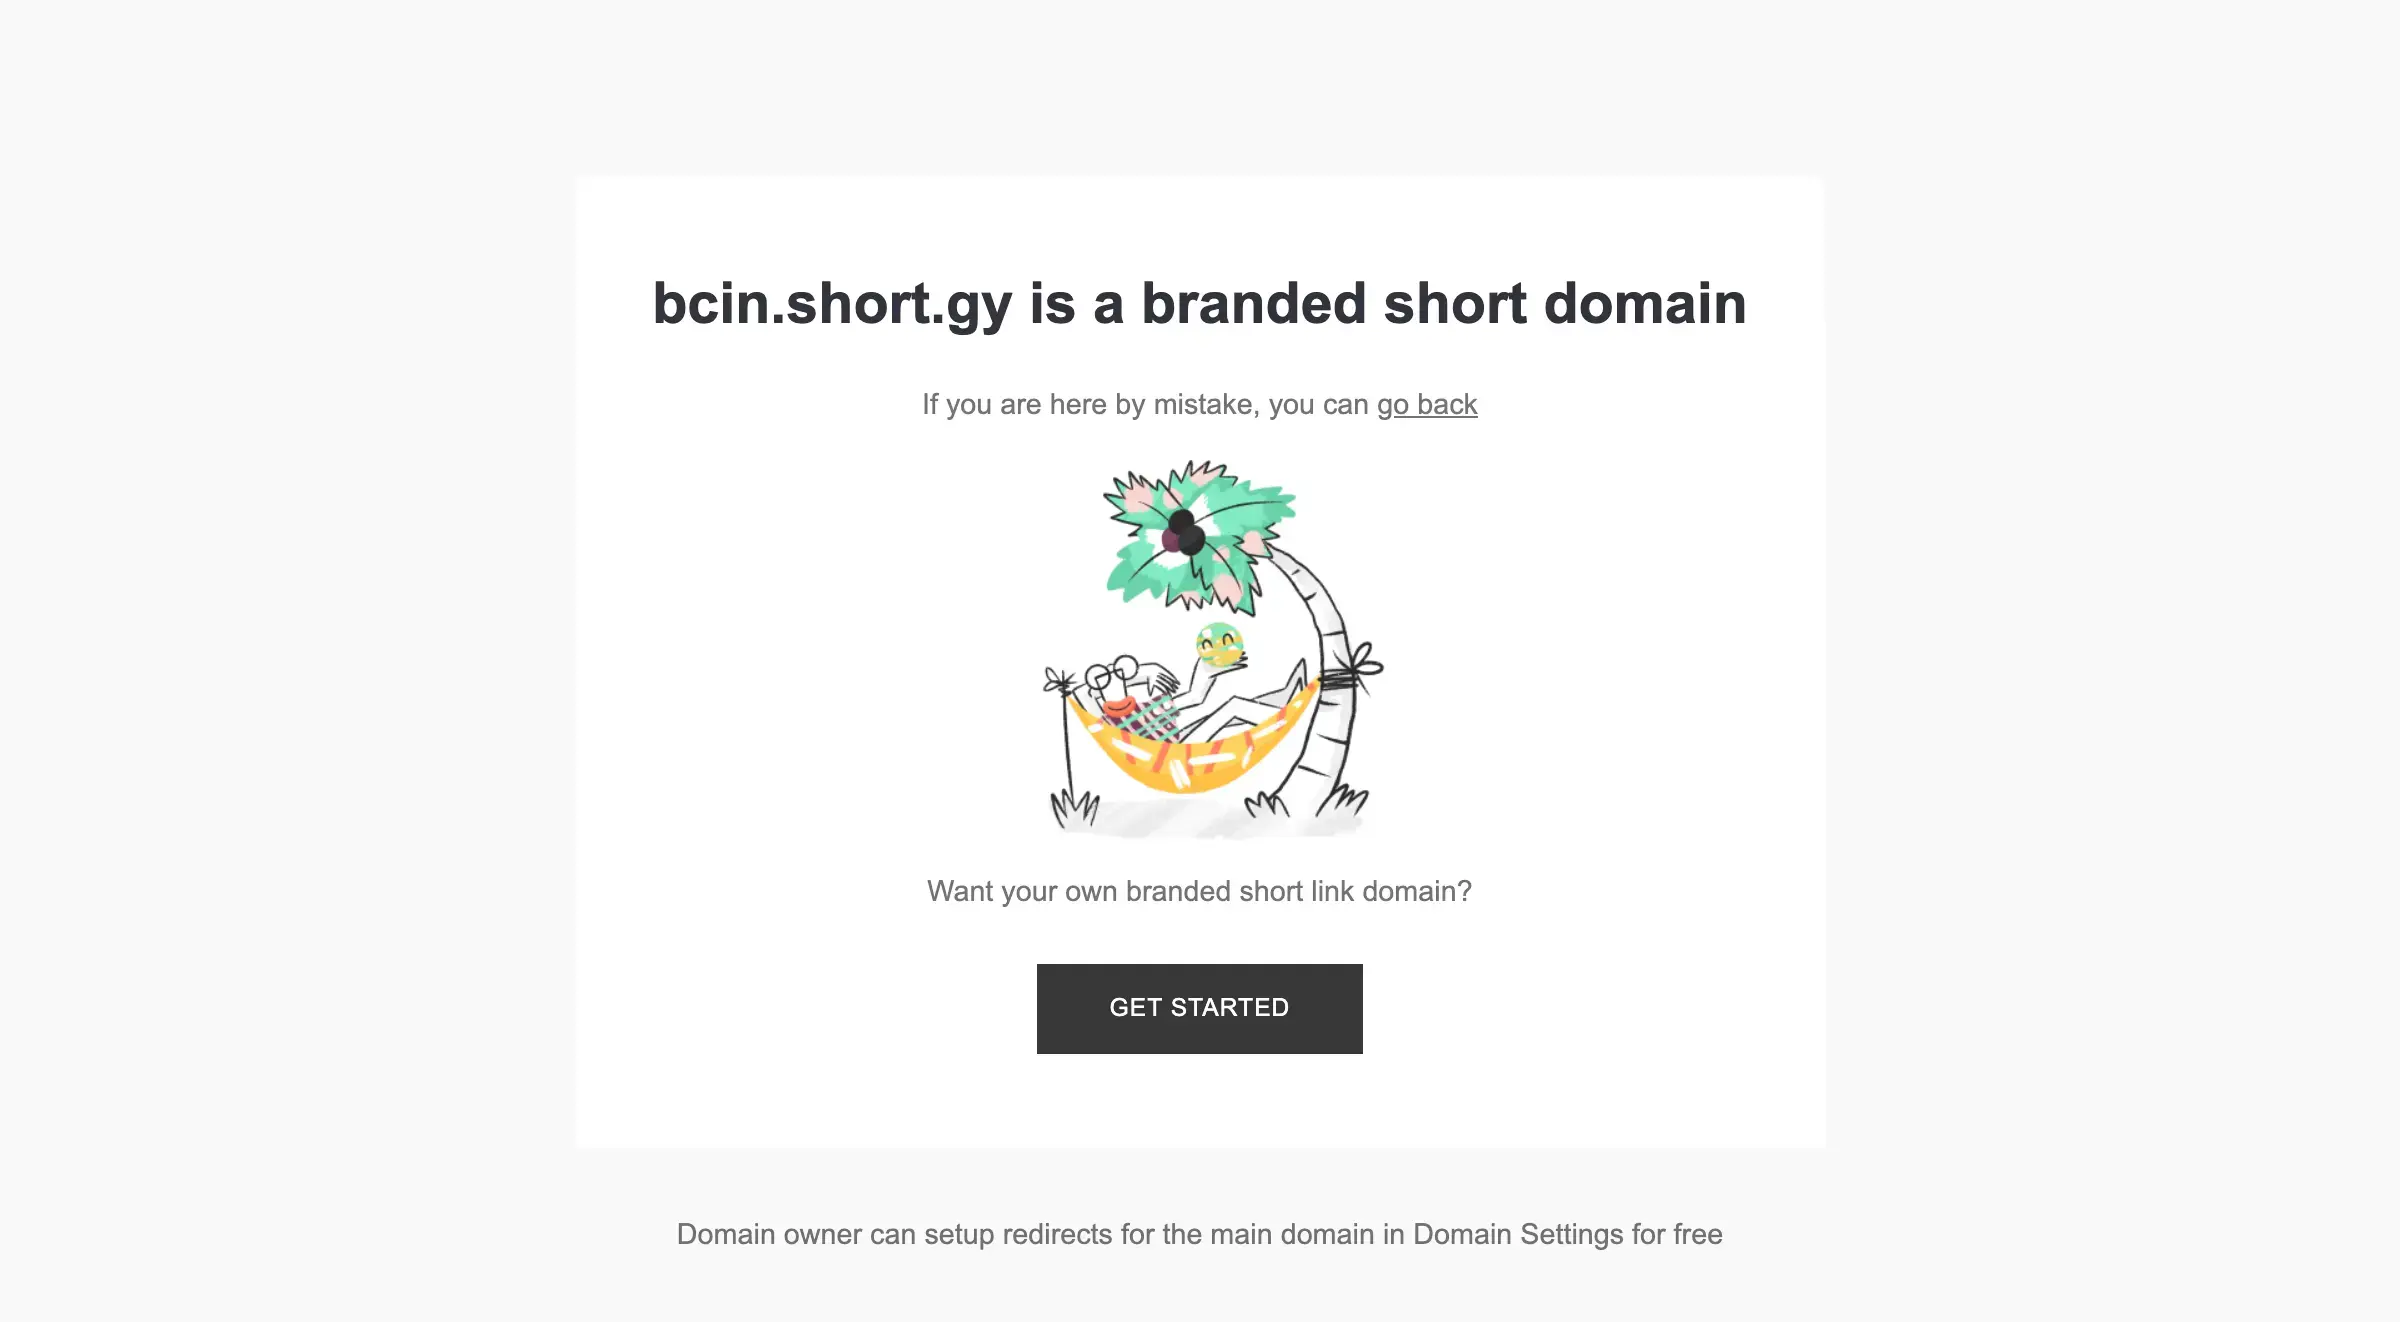 bcin.short.gy is a custom short domain